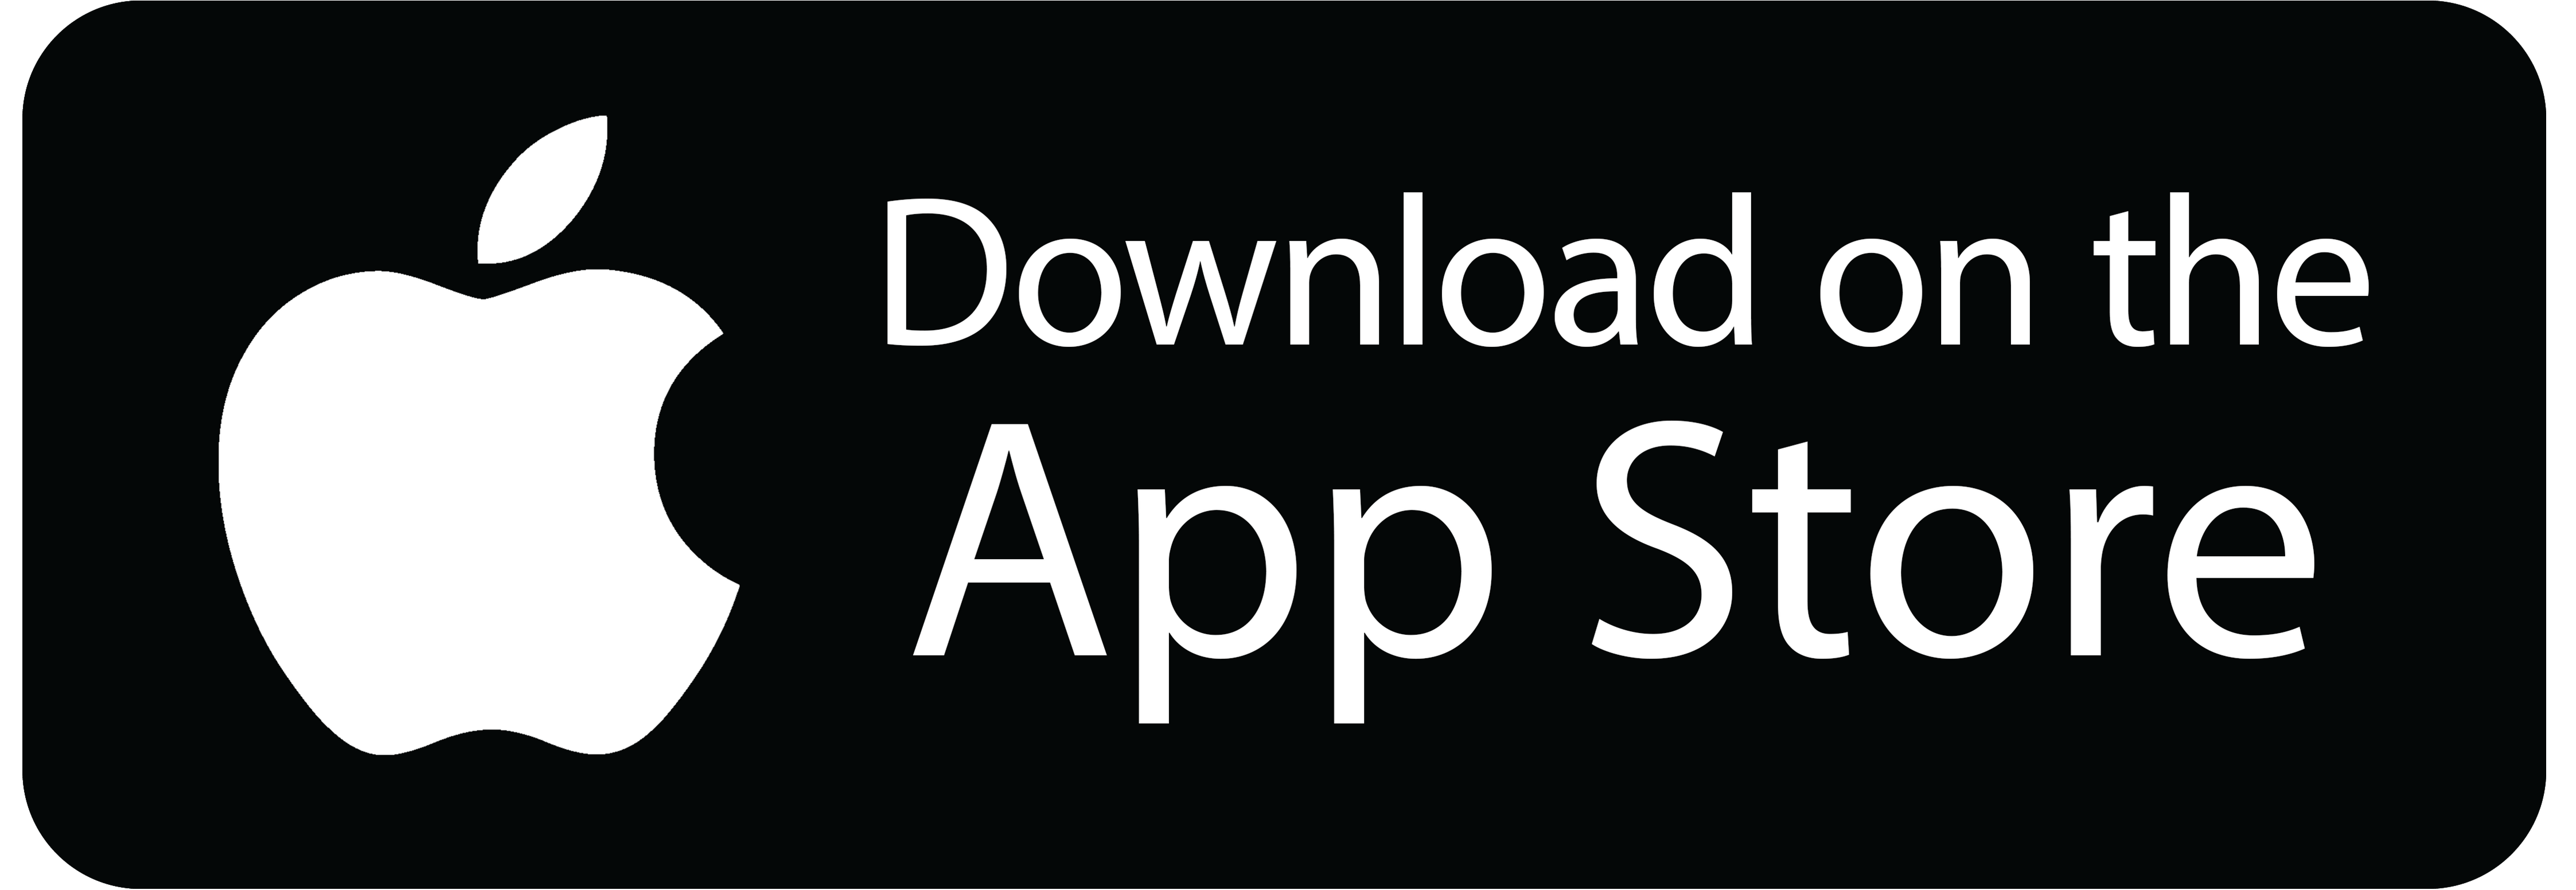 30-itunes-app-store-logo.png